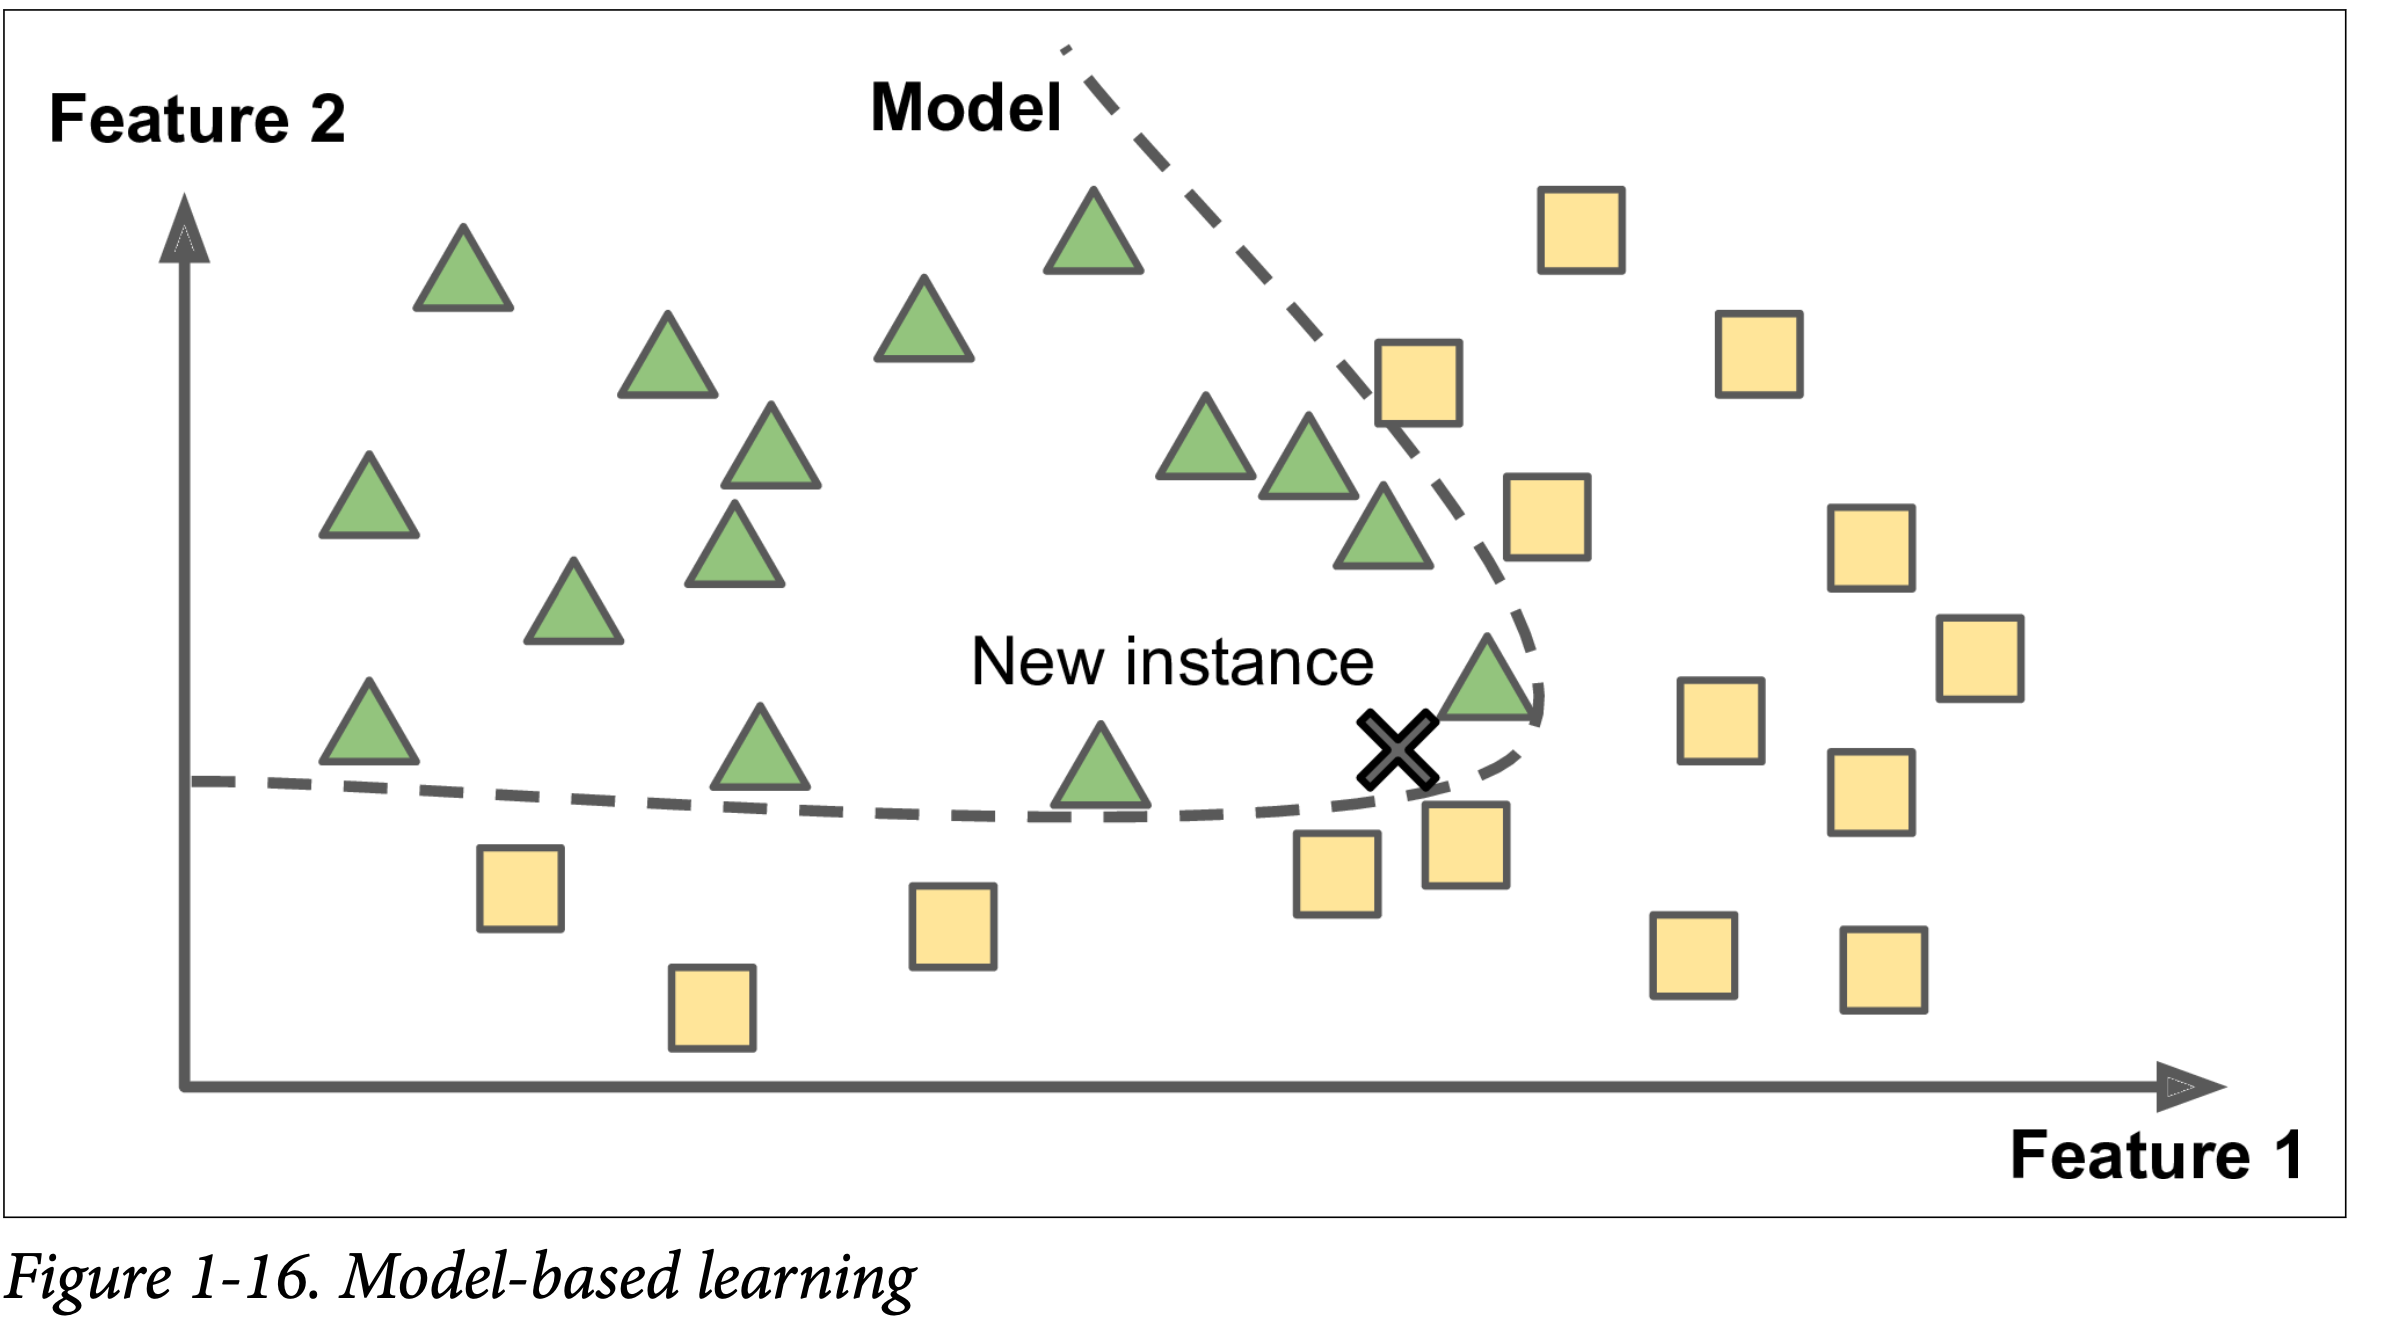 Model-based learning